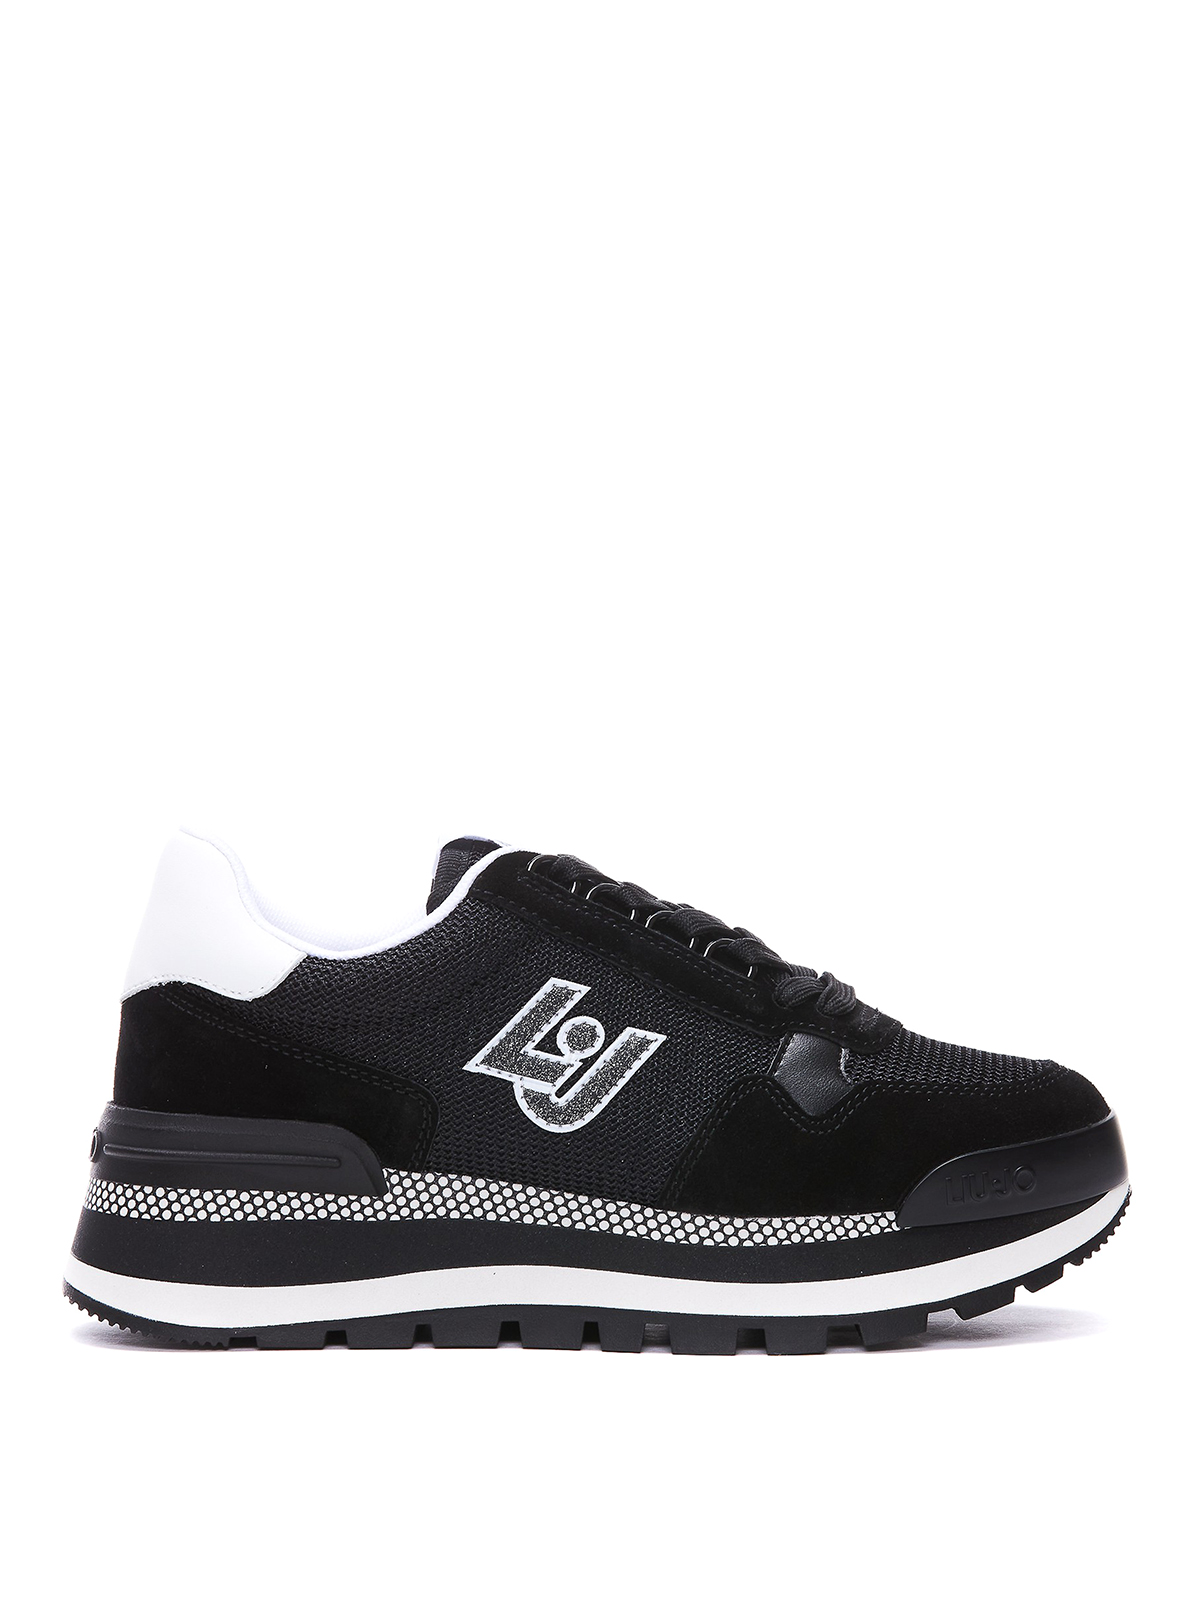 Liu •jo Leather And Fabric Sneakers In Black